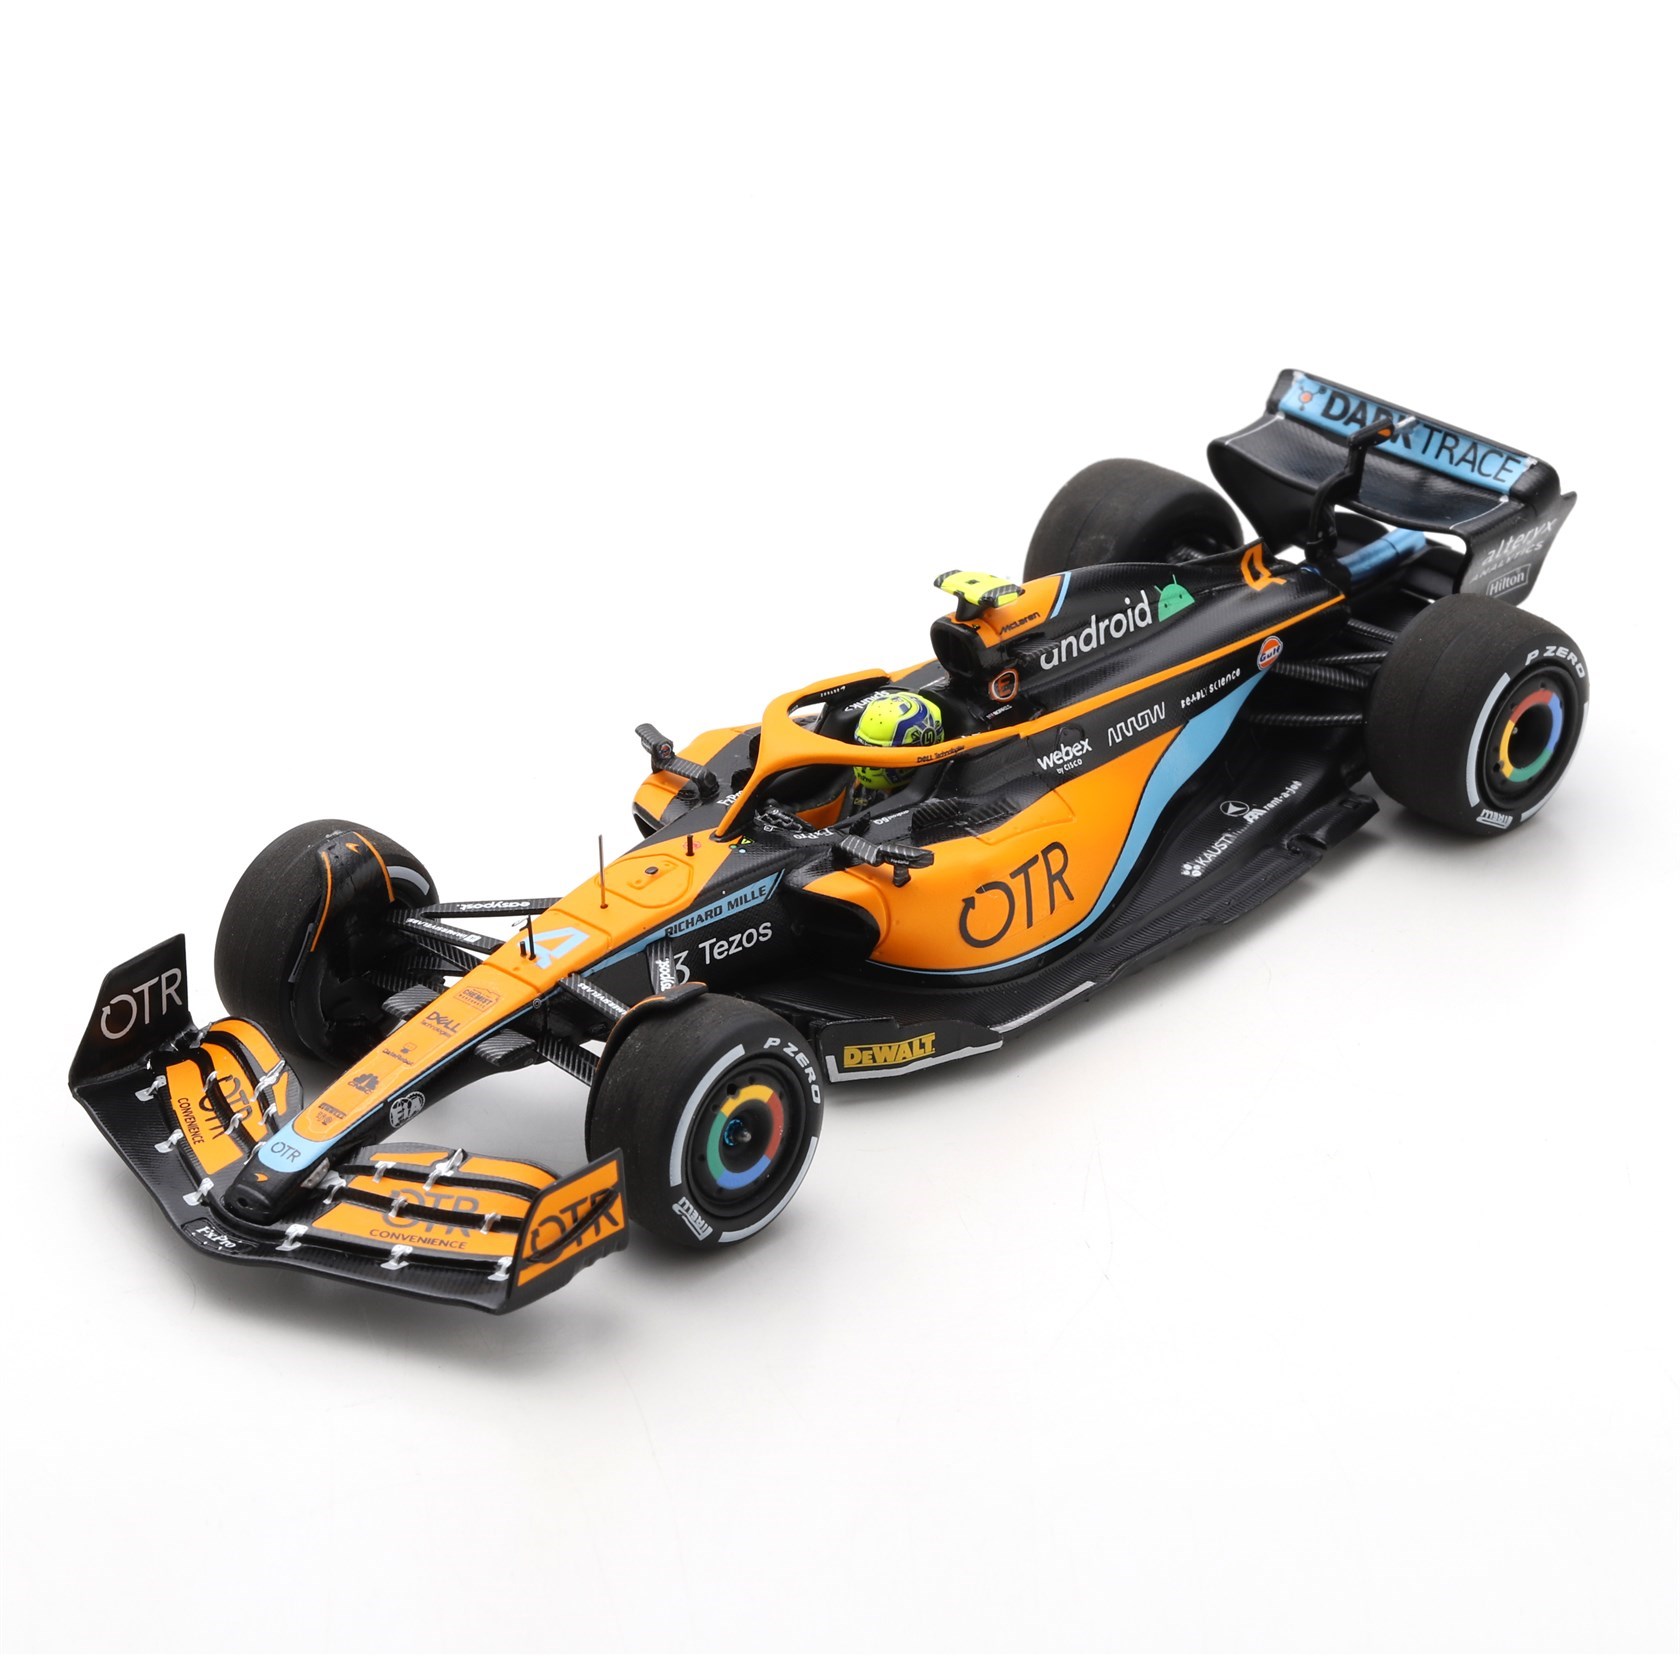 McLaren F1 diecast models